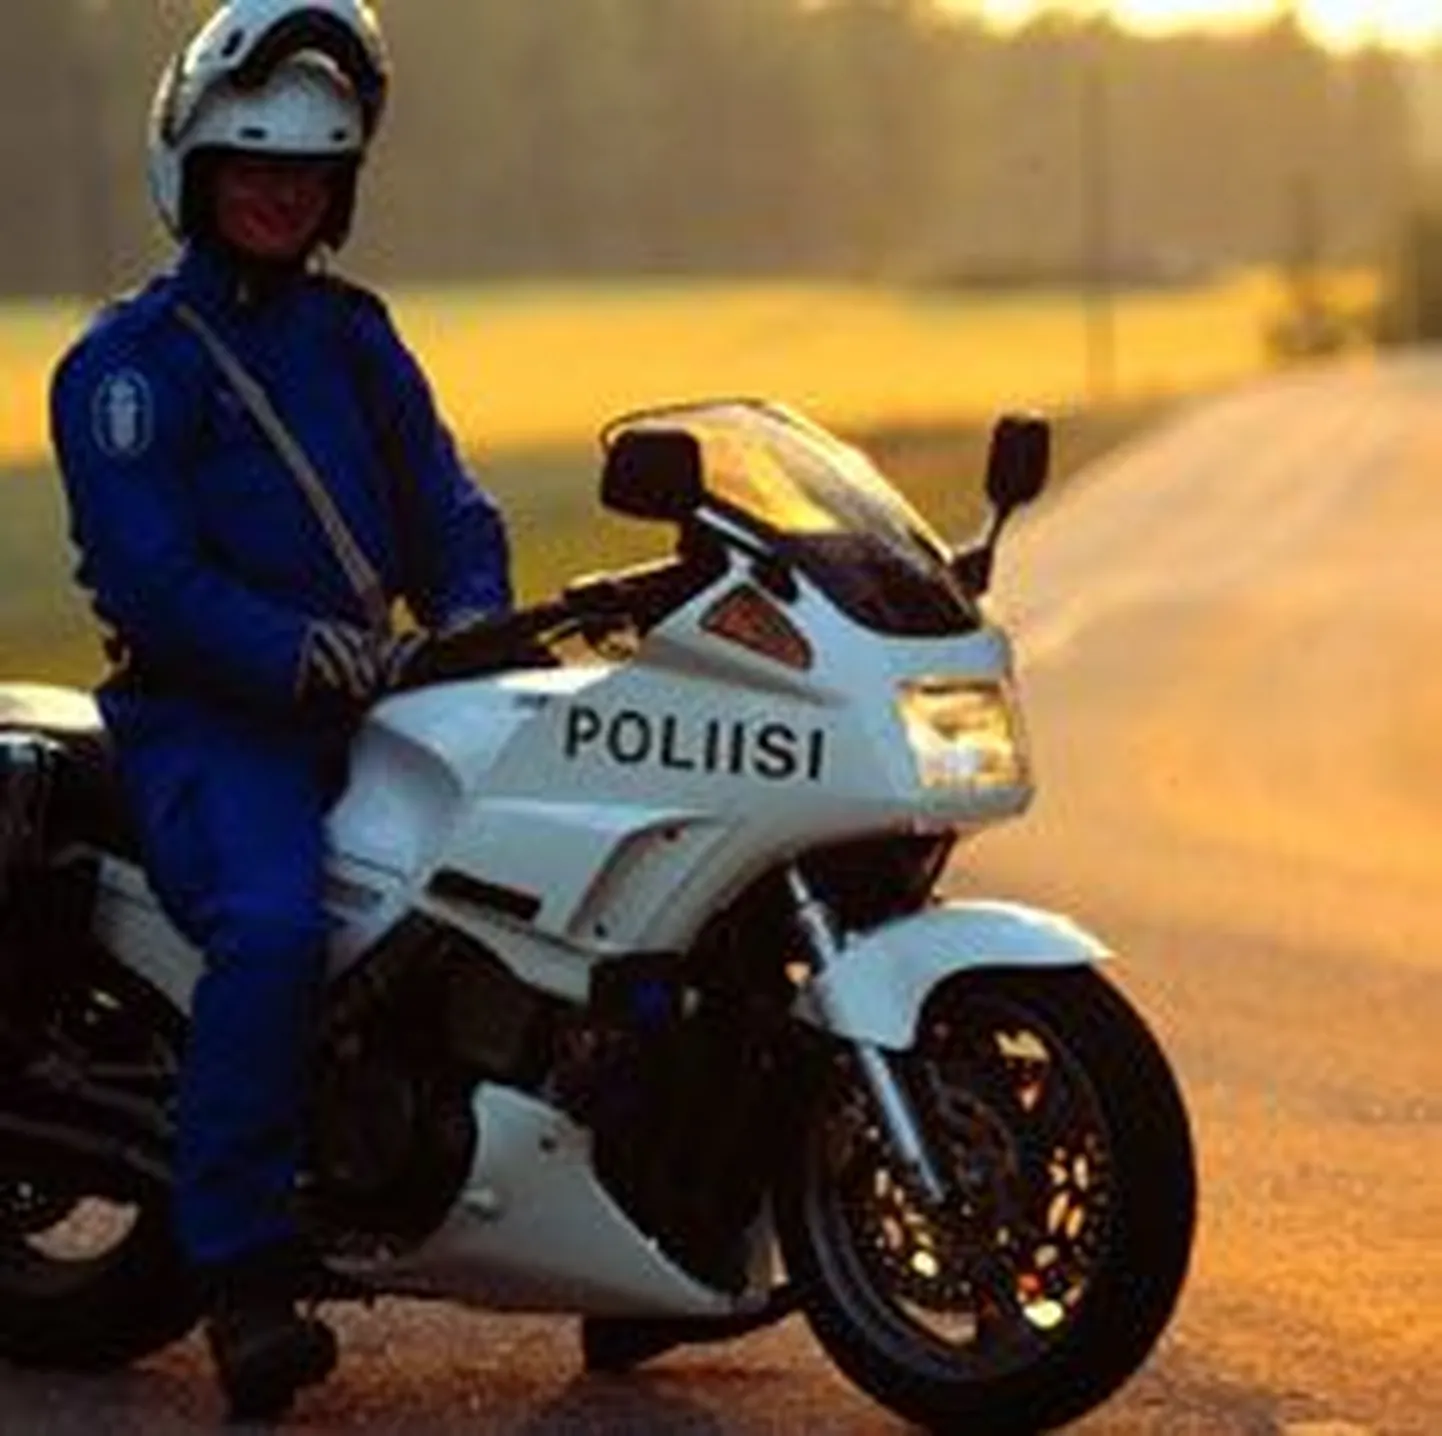 Soome politseinik